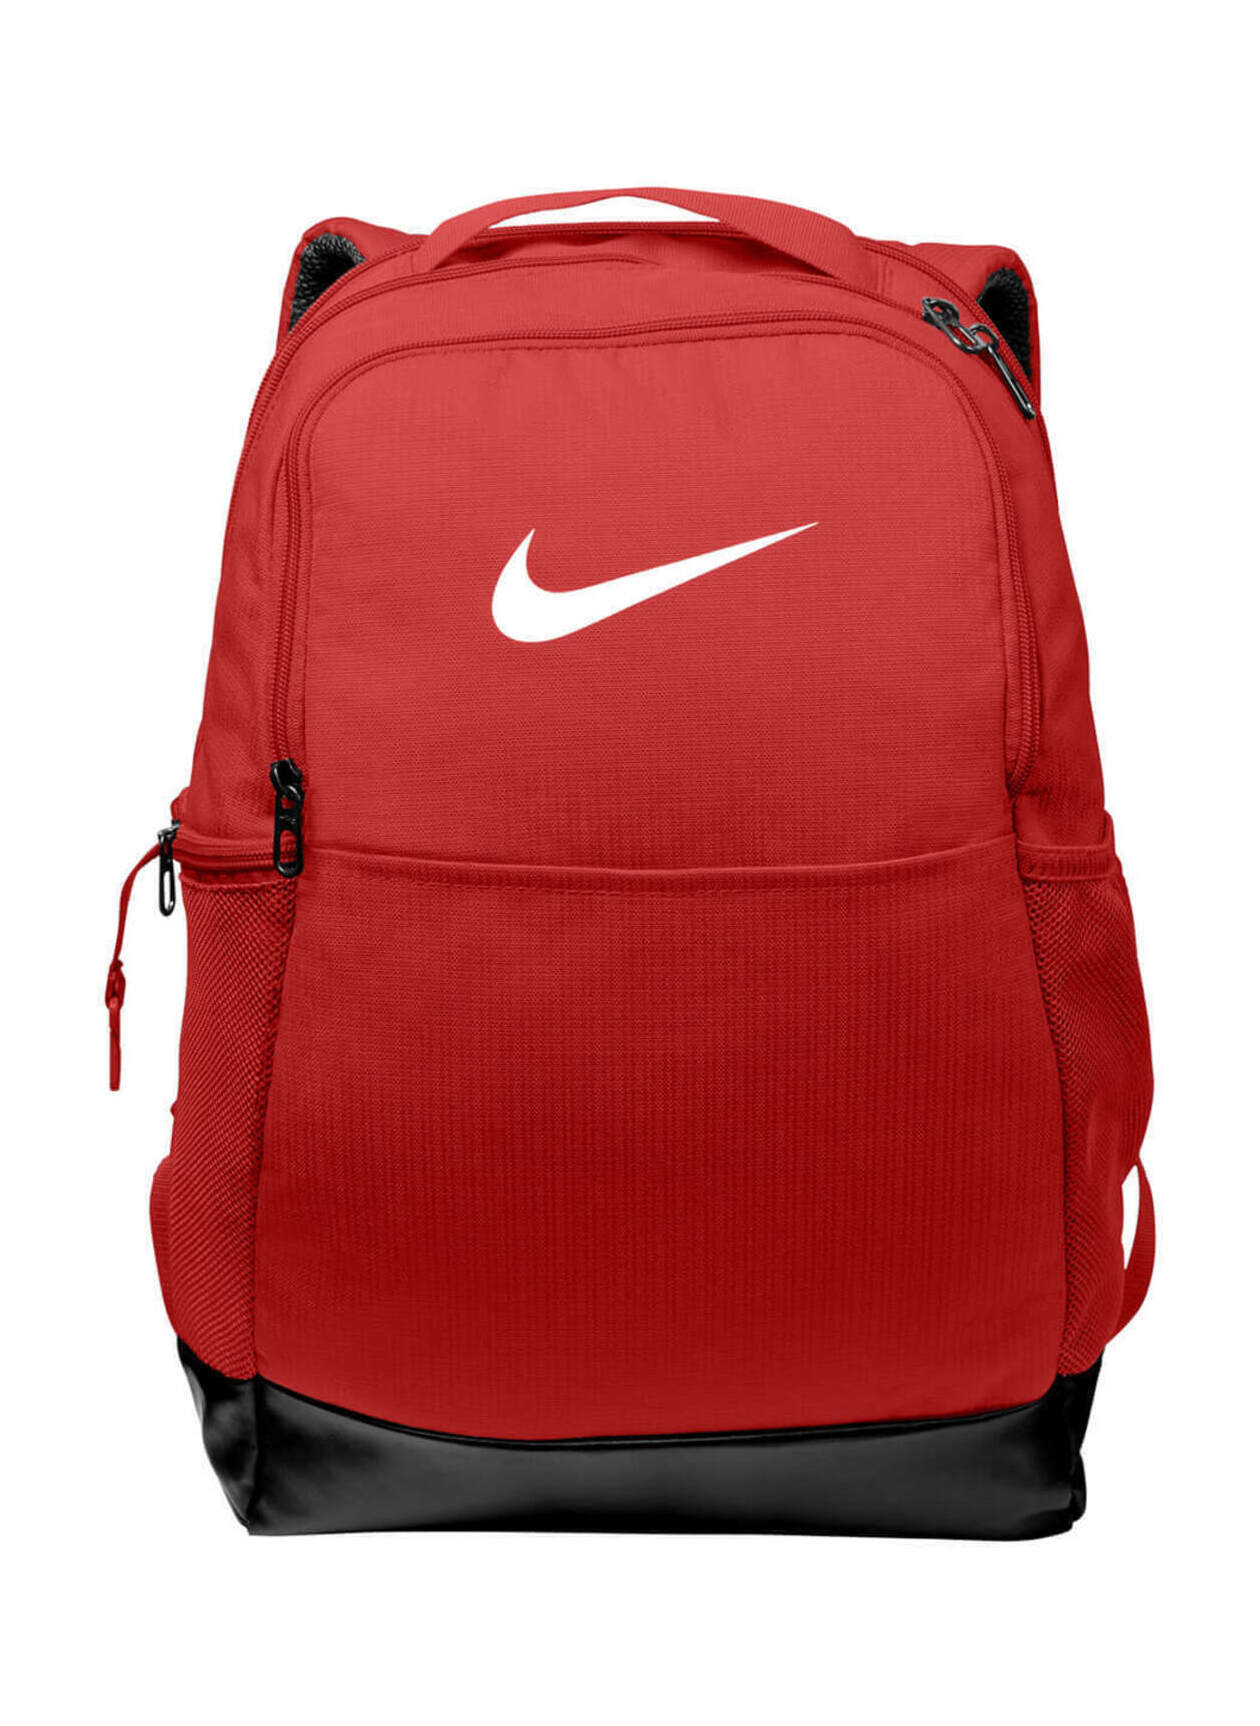 Nike Brasilia Medium Backpack University Red